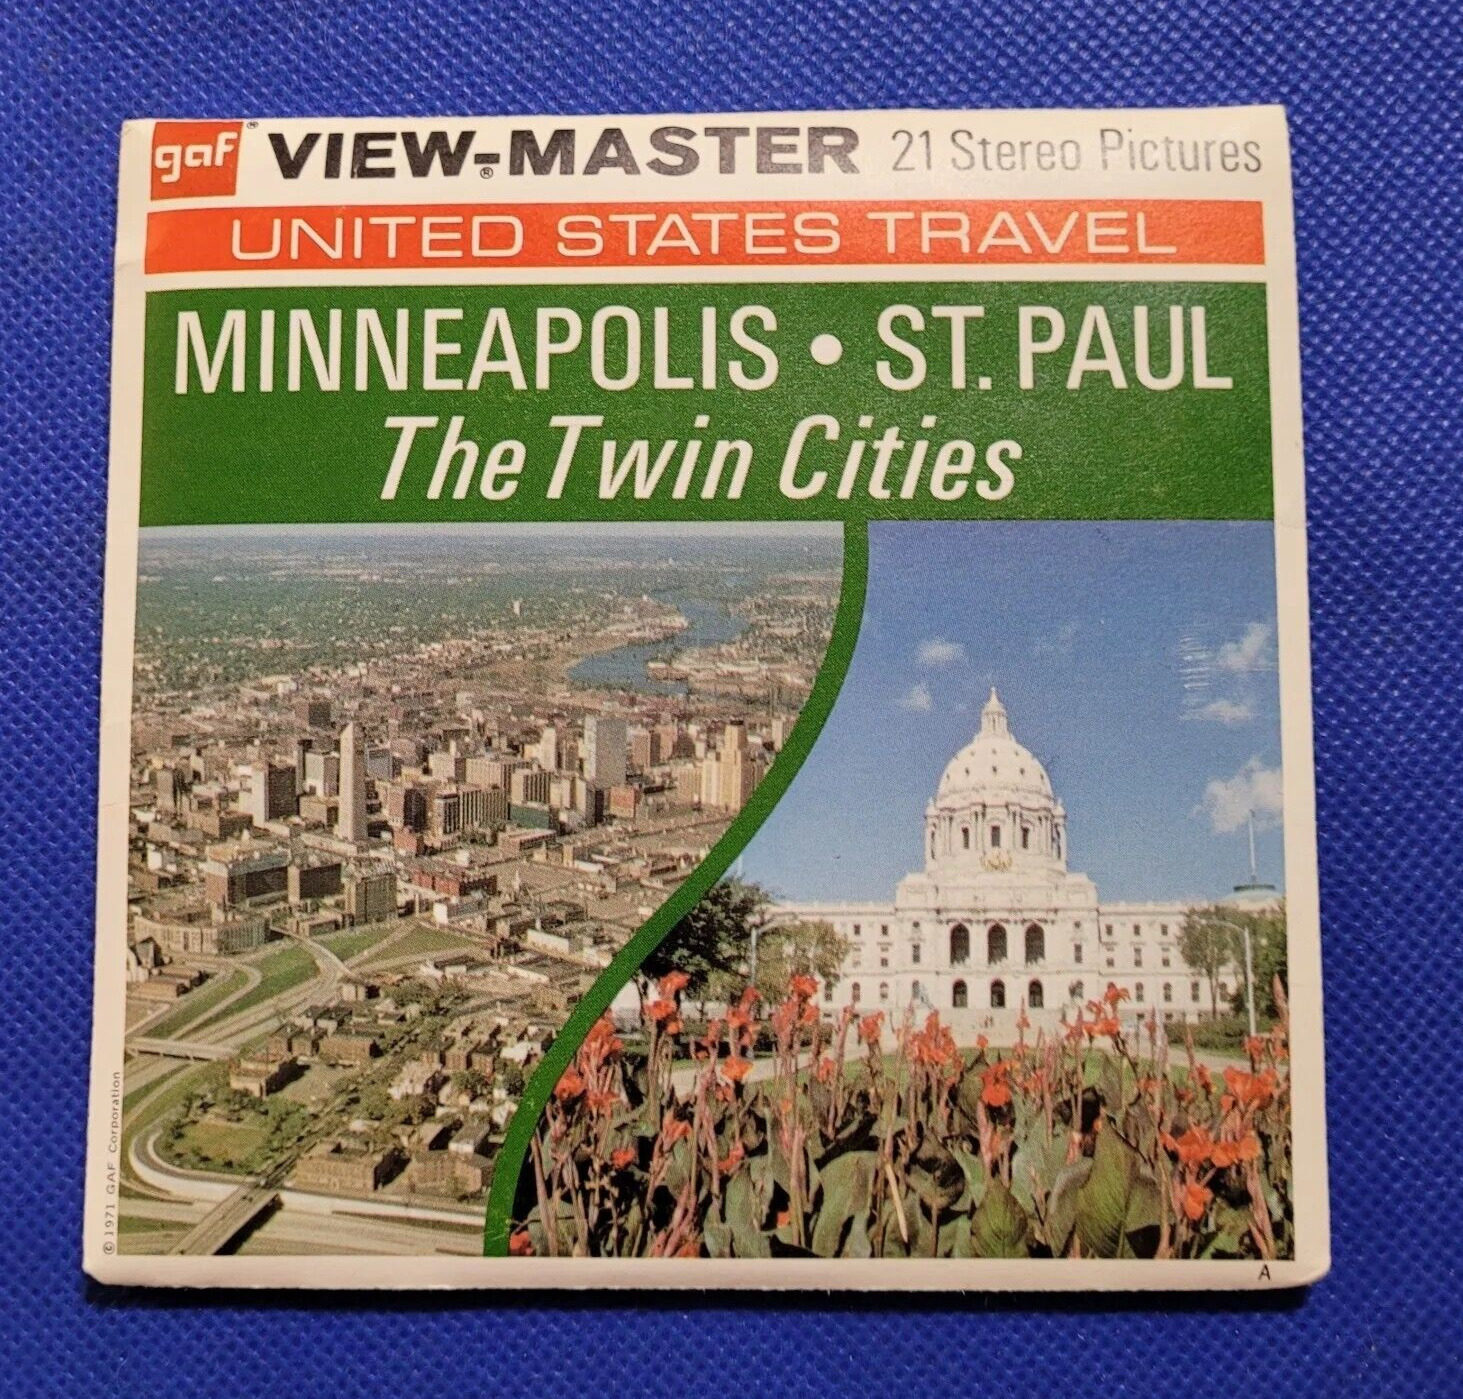 Gaf A512 Minneapolis St Paul Twin Cities Minnesota view-master 3 Reels Packet